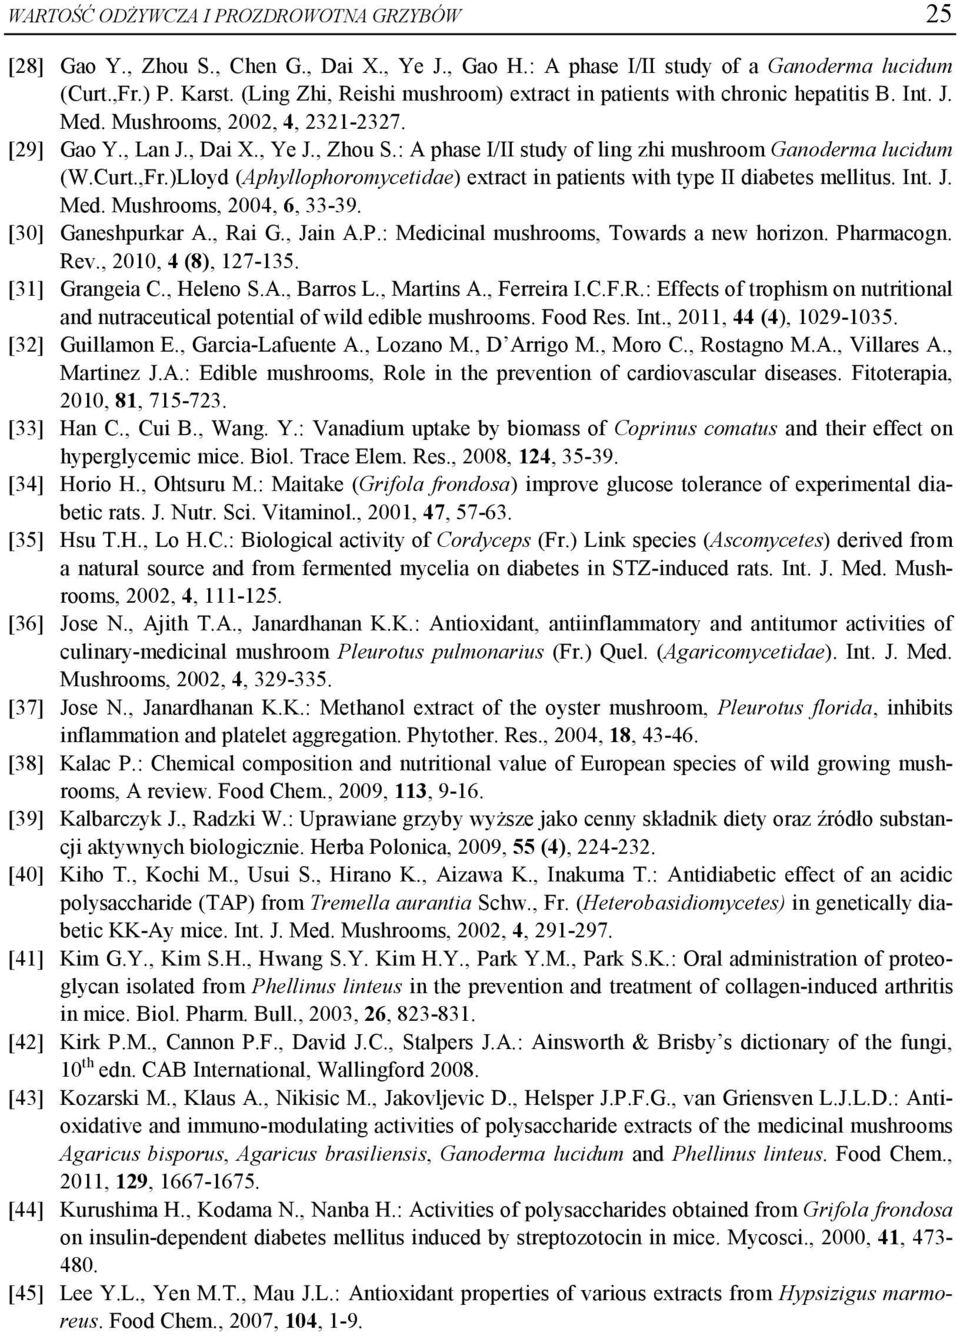 : A phase I/II study of ling zhi mushroom Ganoderma lucidum (W.Curt.,Fr.)Lloyd (Aphyllophoromycetidae) extract in patients with type II diabetes mellitus. Int. J. Med. Mushrooms, 2004, 6, 33-39.